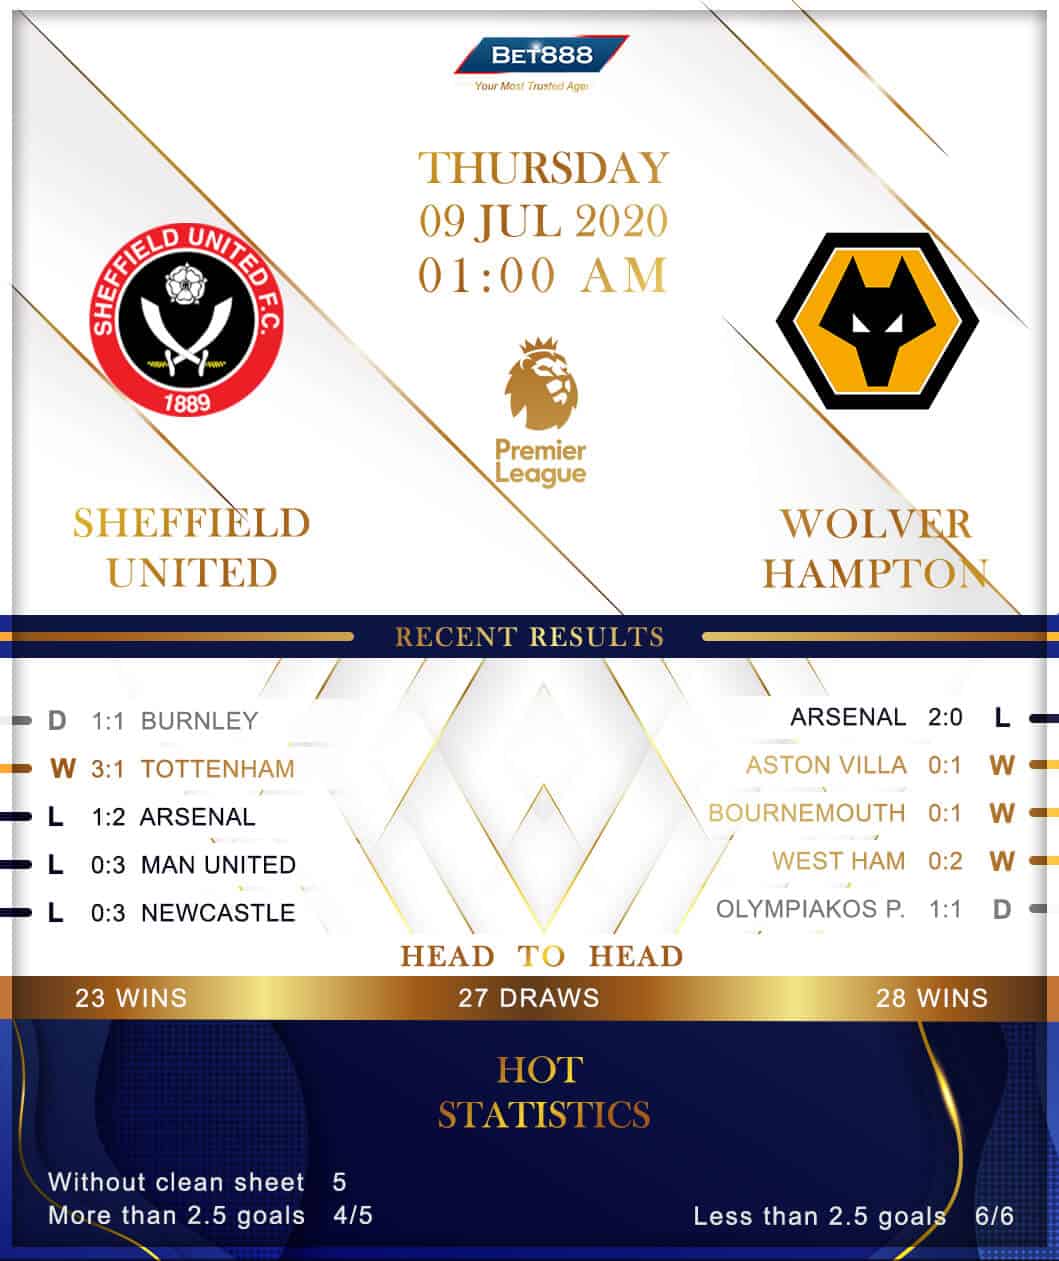 Sheffield United vs Wolverhampton Wanderers 09/07/20